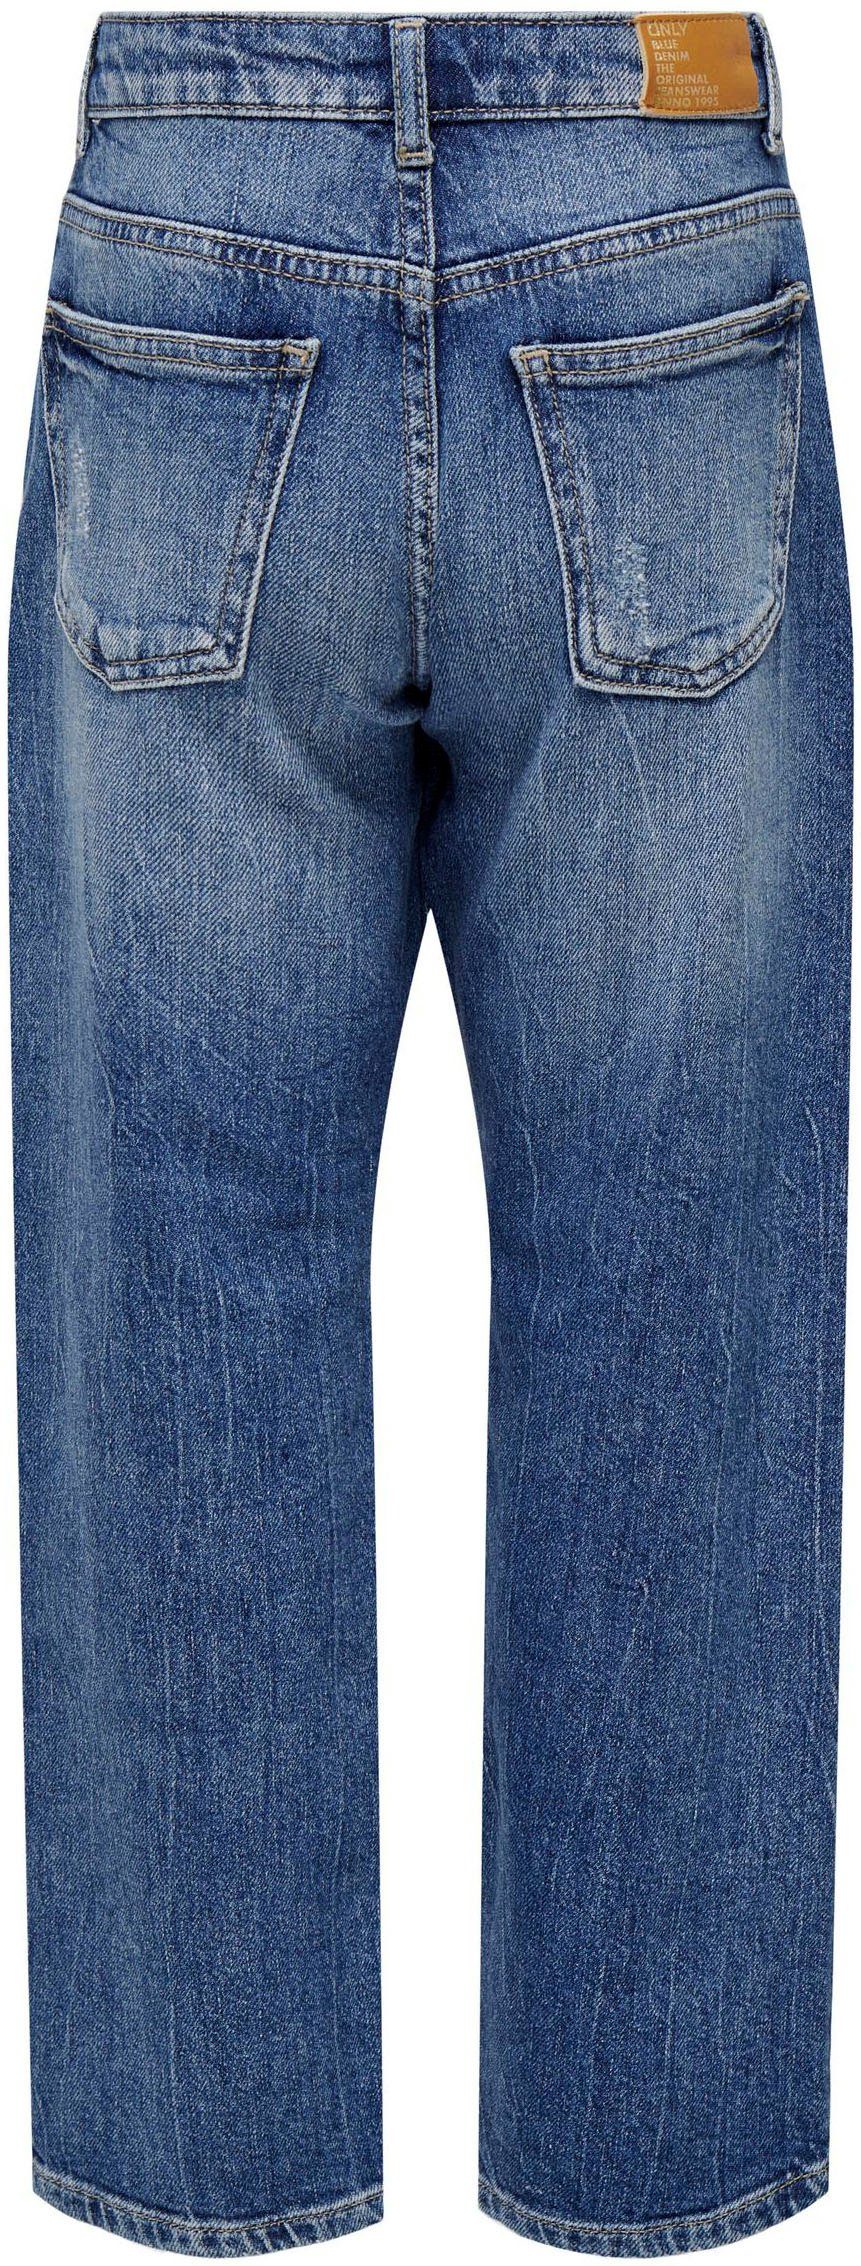 Jeans AZG WIDE ONLY KOGMEGAN NOOS KIDS DNM Weite